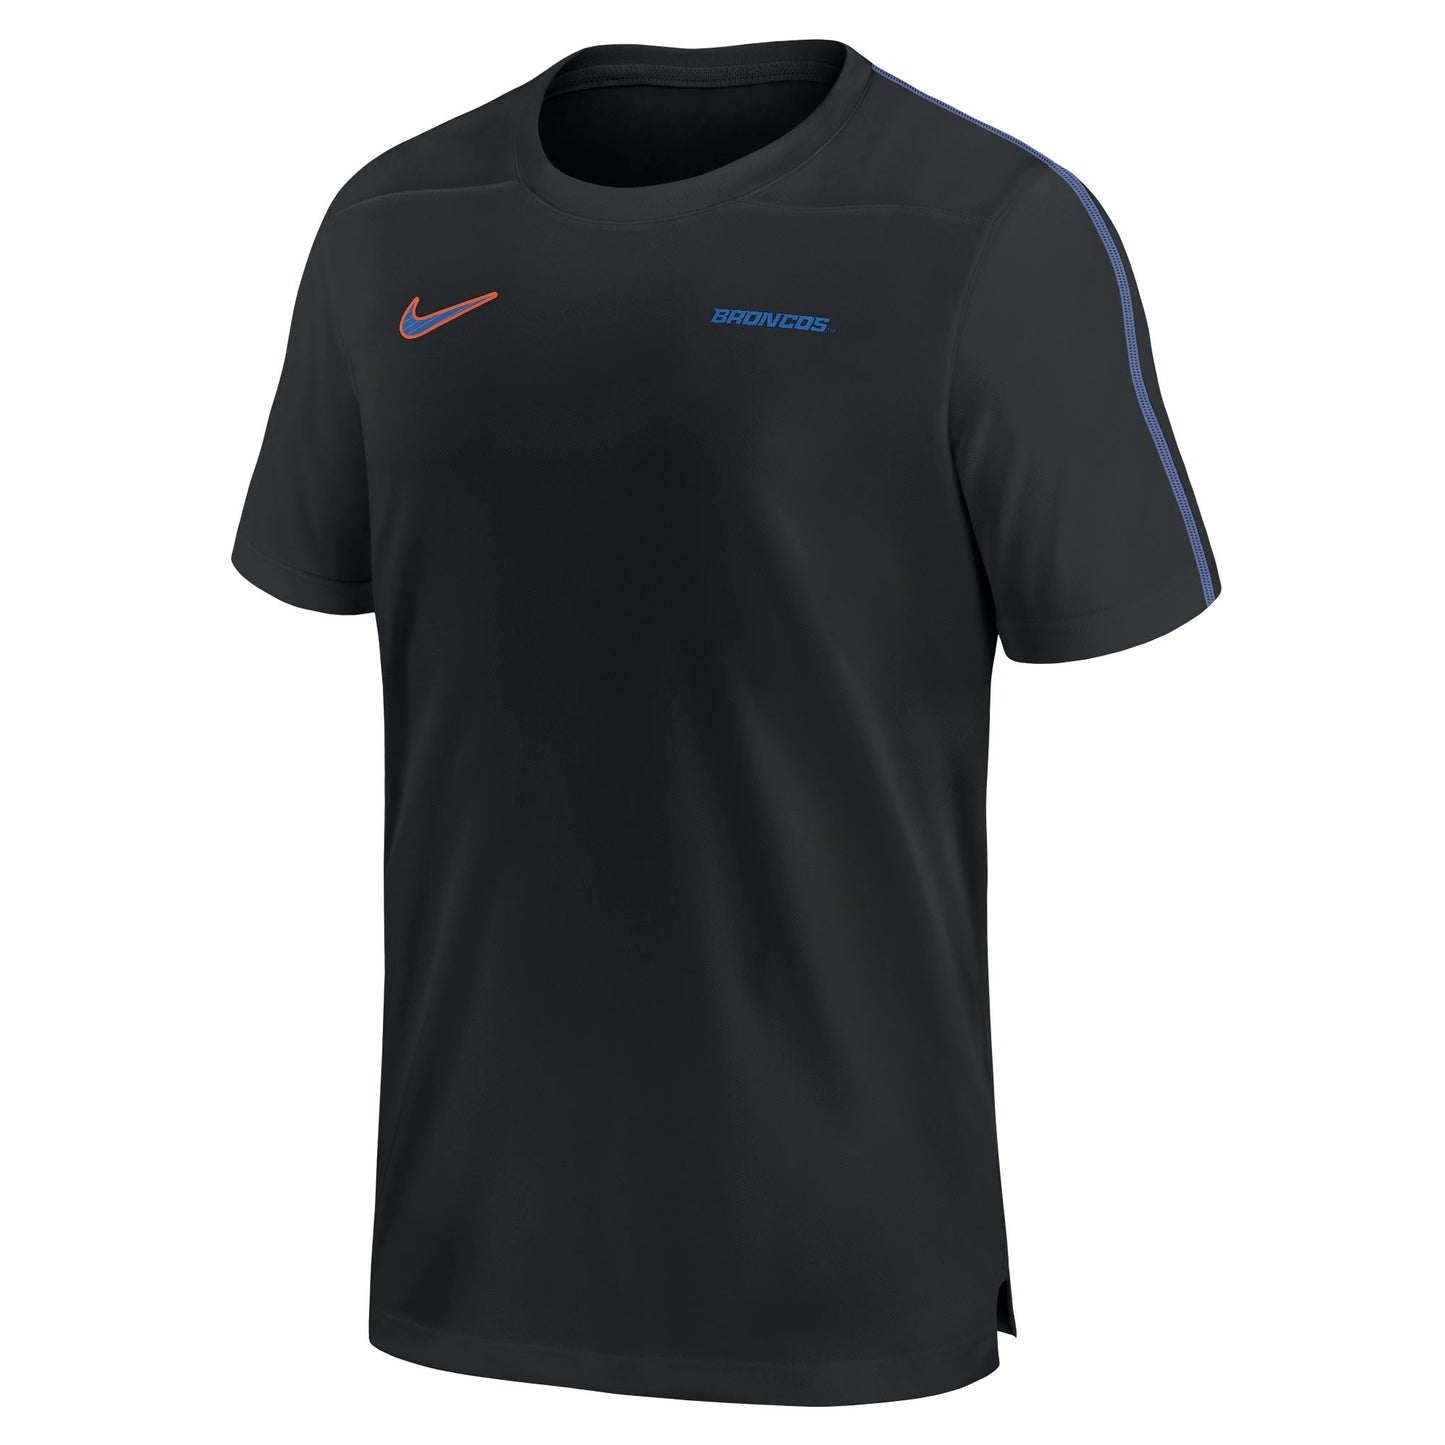 Boise State Broncos Nike Men's Coach's UV Dri-Fit T-Shirt (Black)